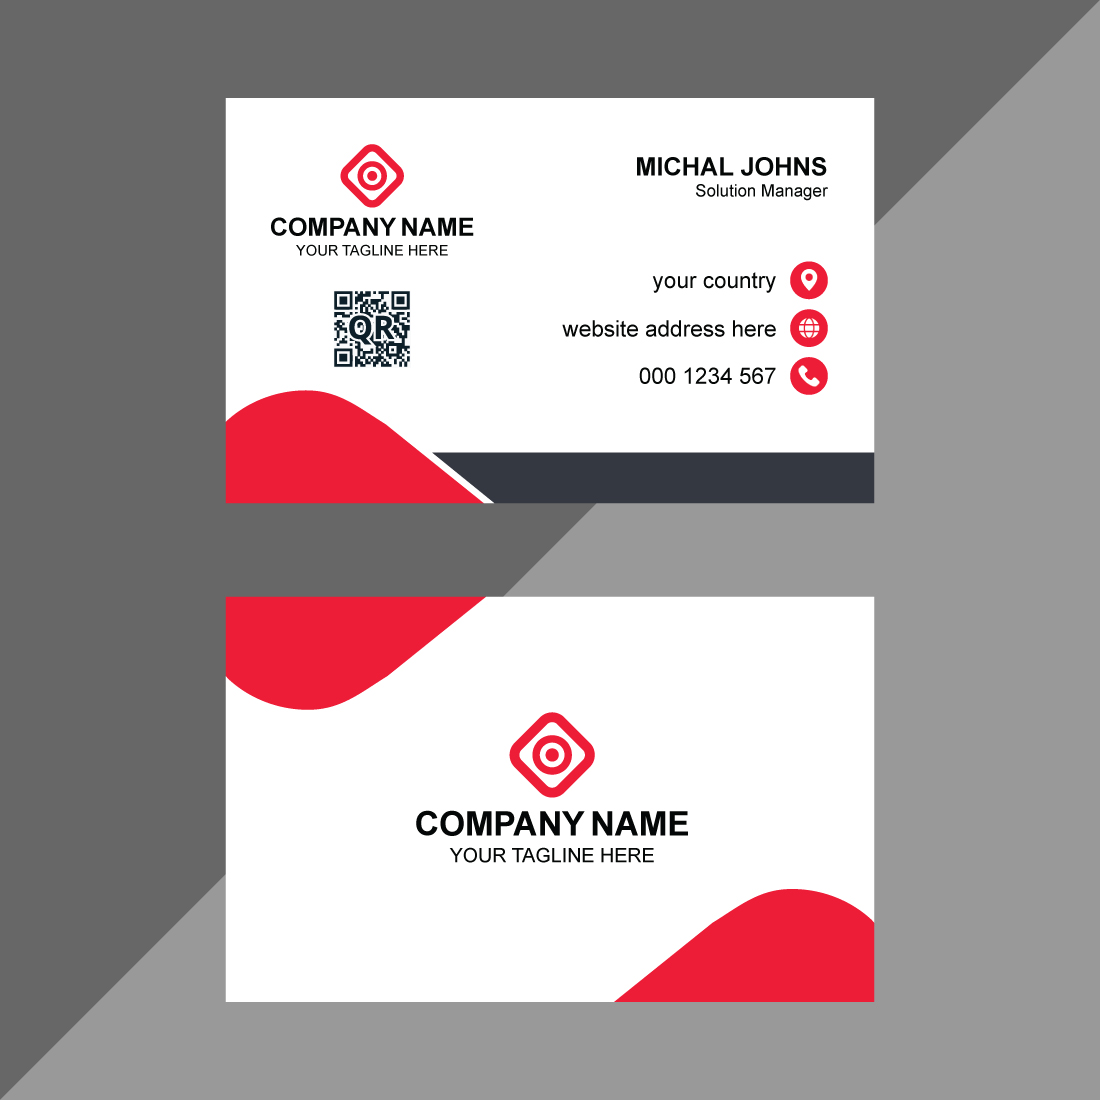 Unique Business card template design preview image.